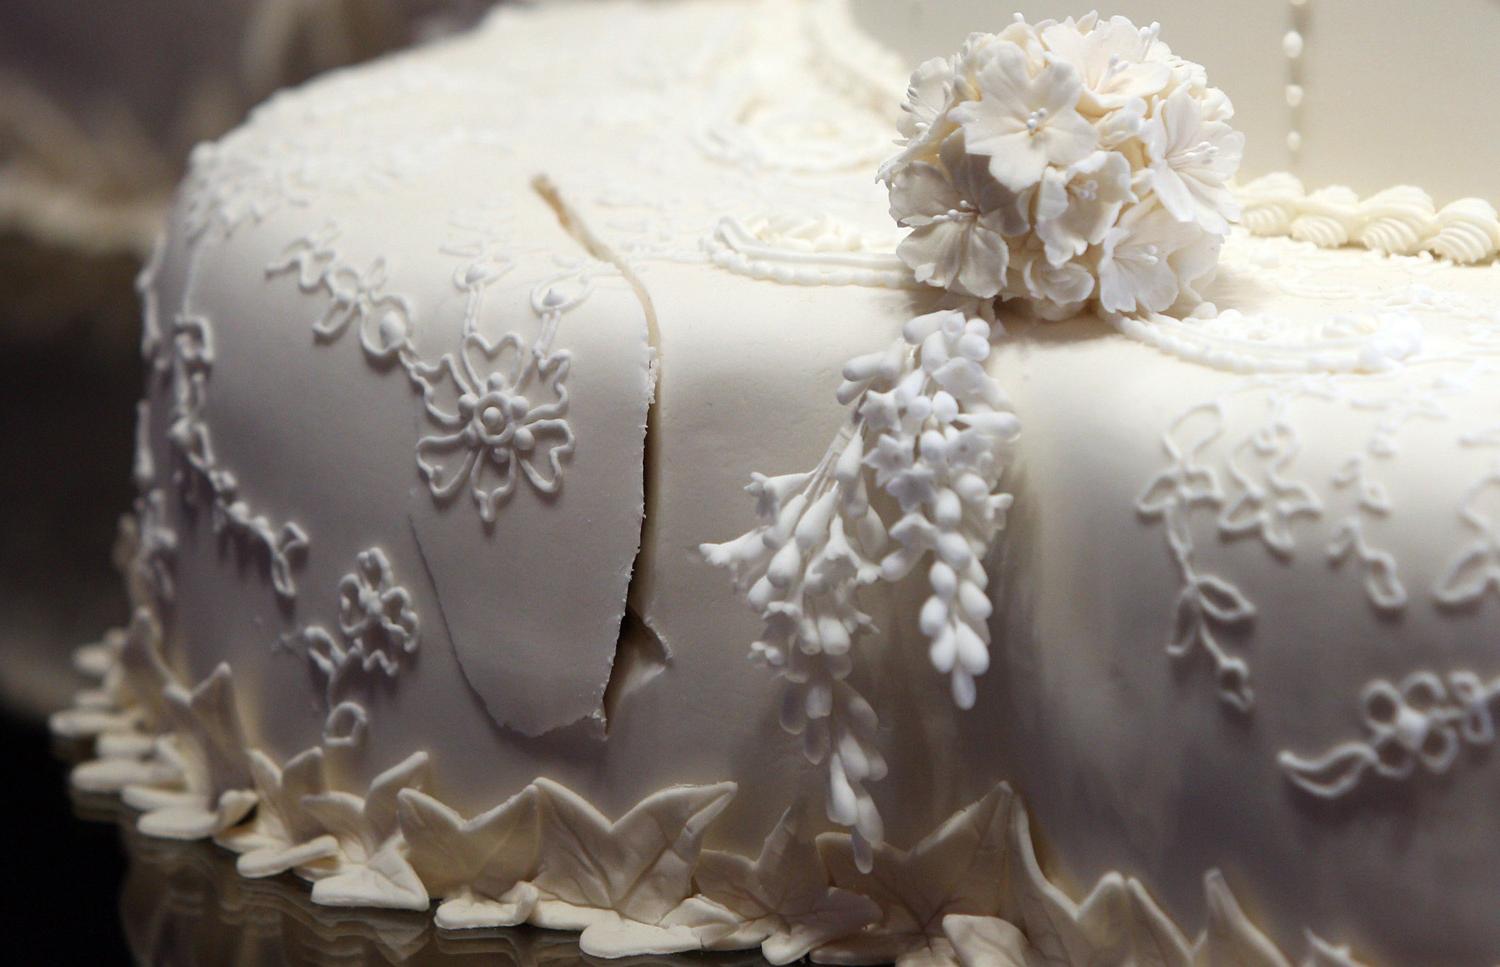 the royal wedding cake is